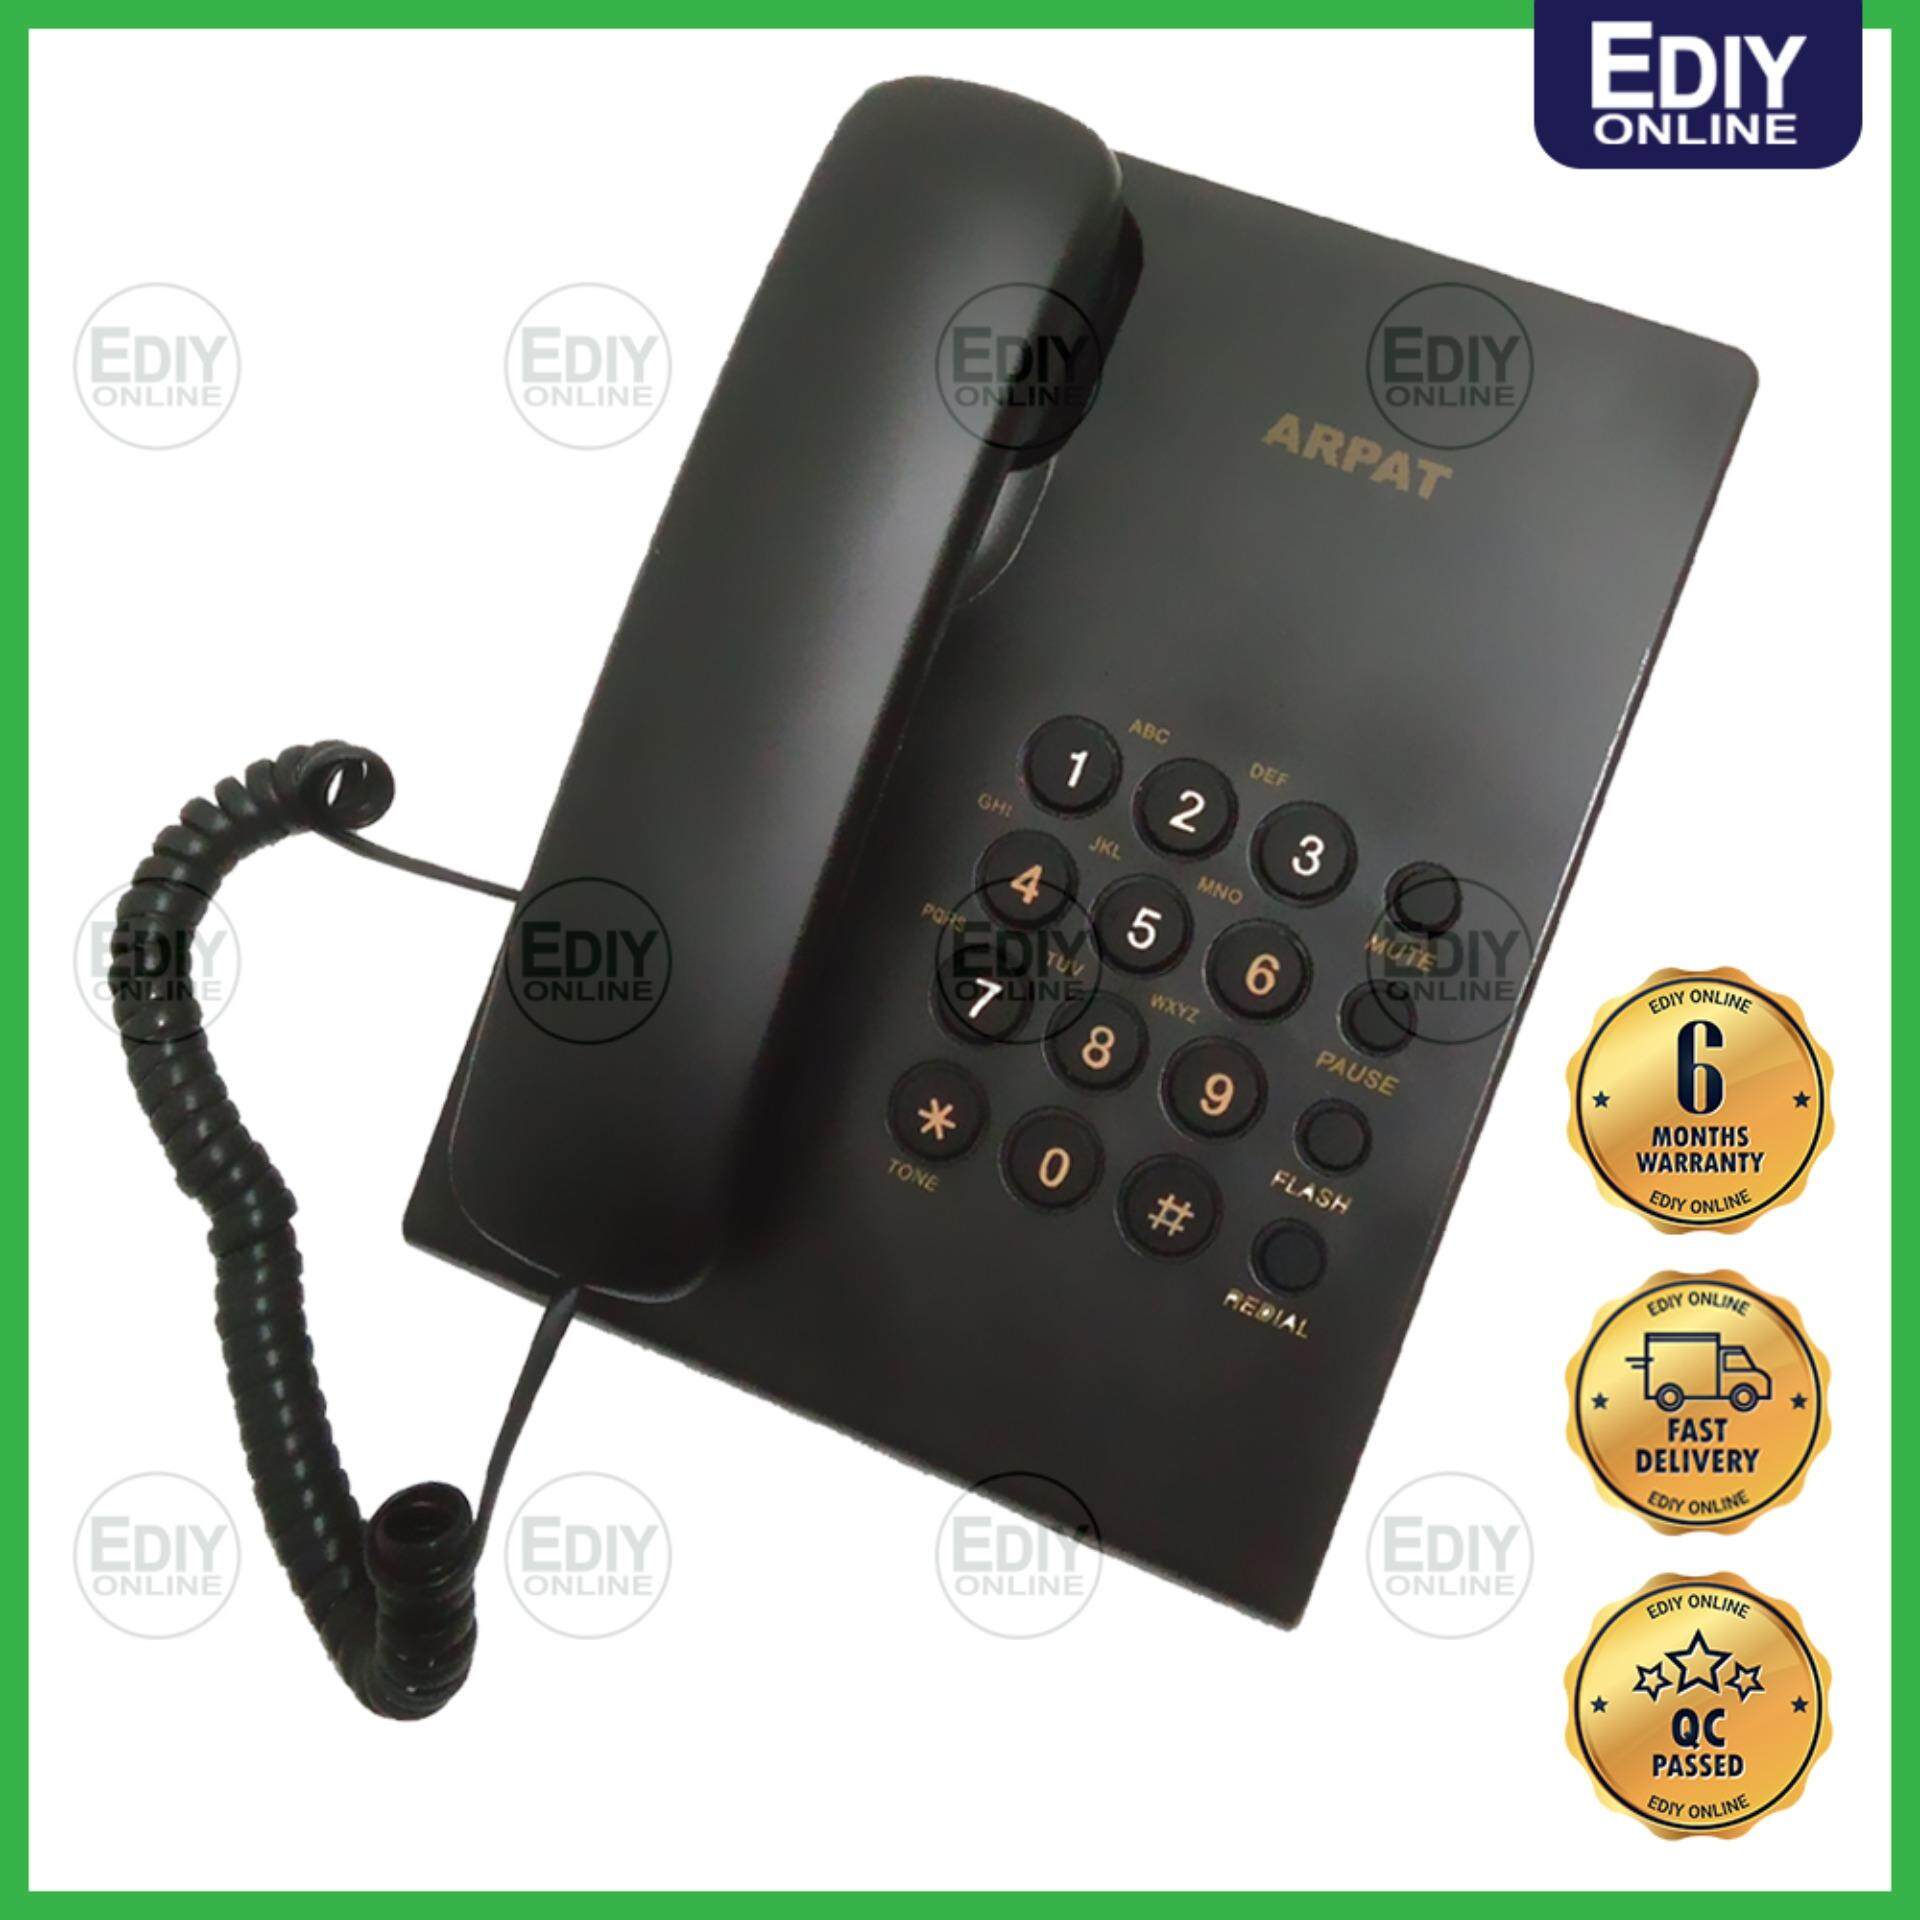 ARPAT AR-8500MX 500MX INTEGRATED TELEPHONE TELEFON PHONE SYSTEM (RANDOM COLOR) _3601017 ?EXTRA BOX PACKING?